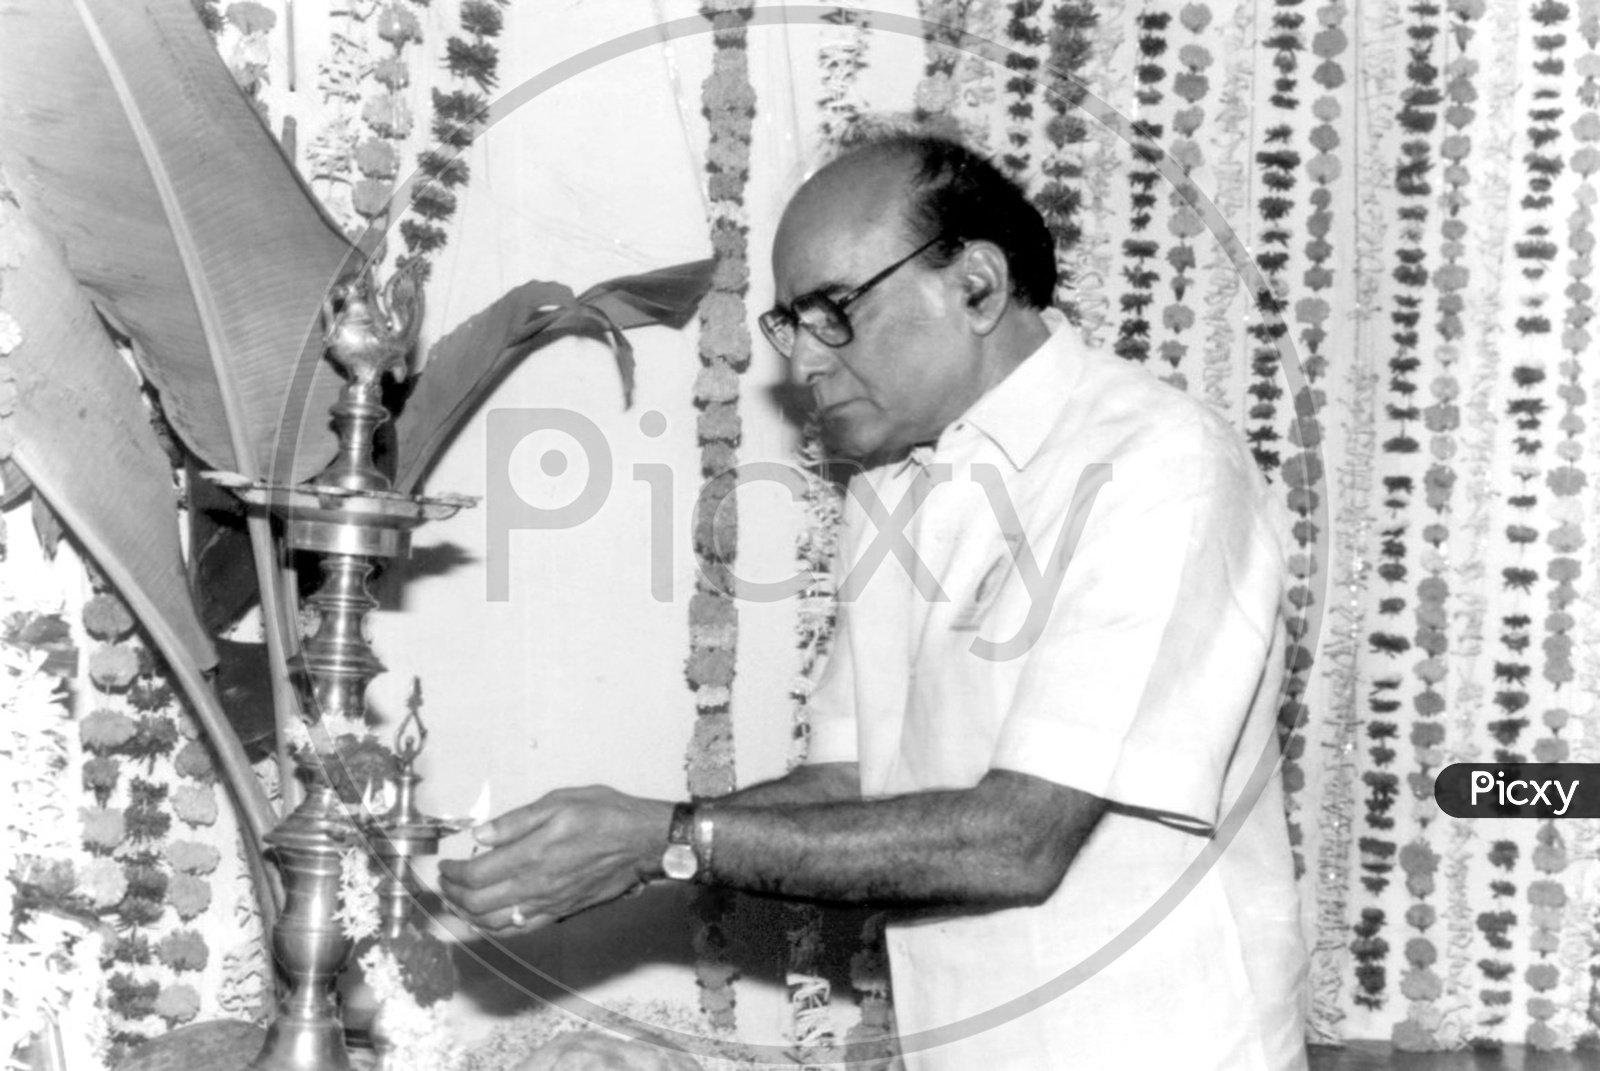 Chiranjeevi Father Konidela Venkat Rao